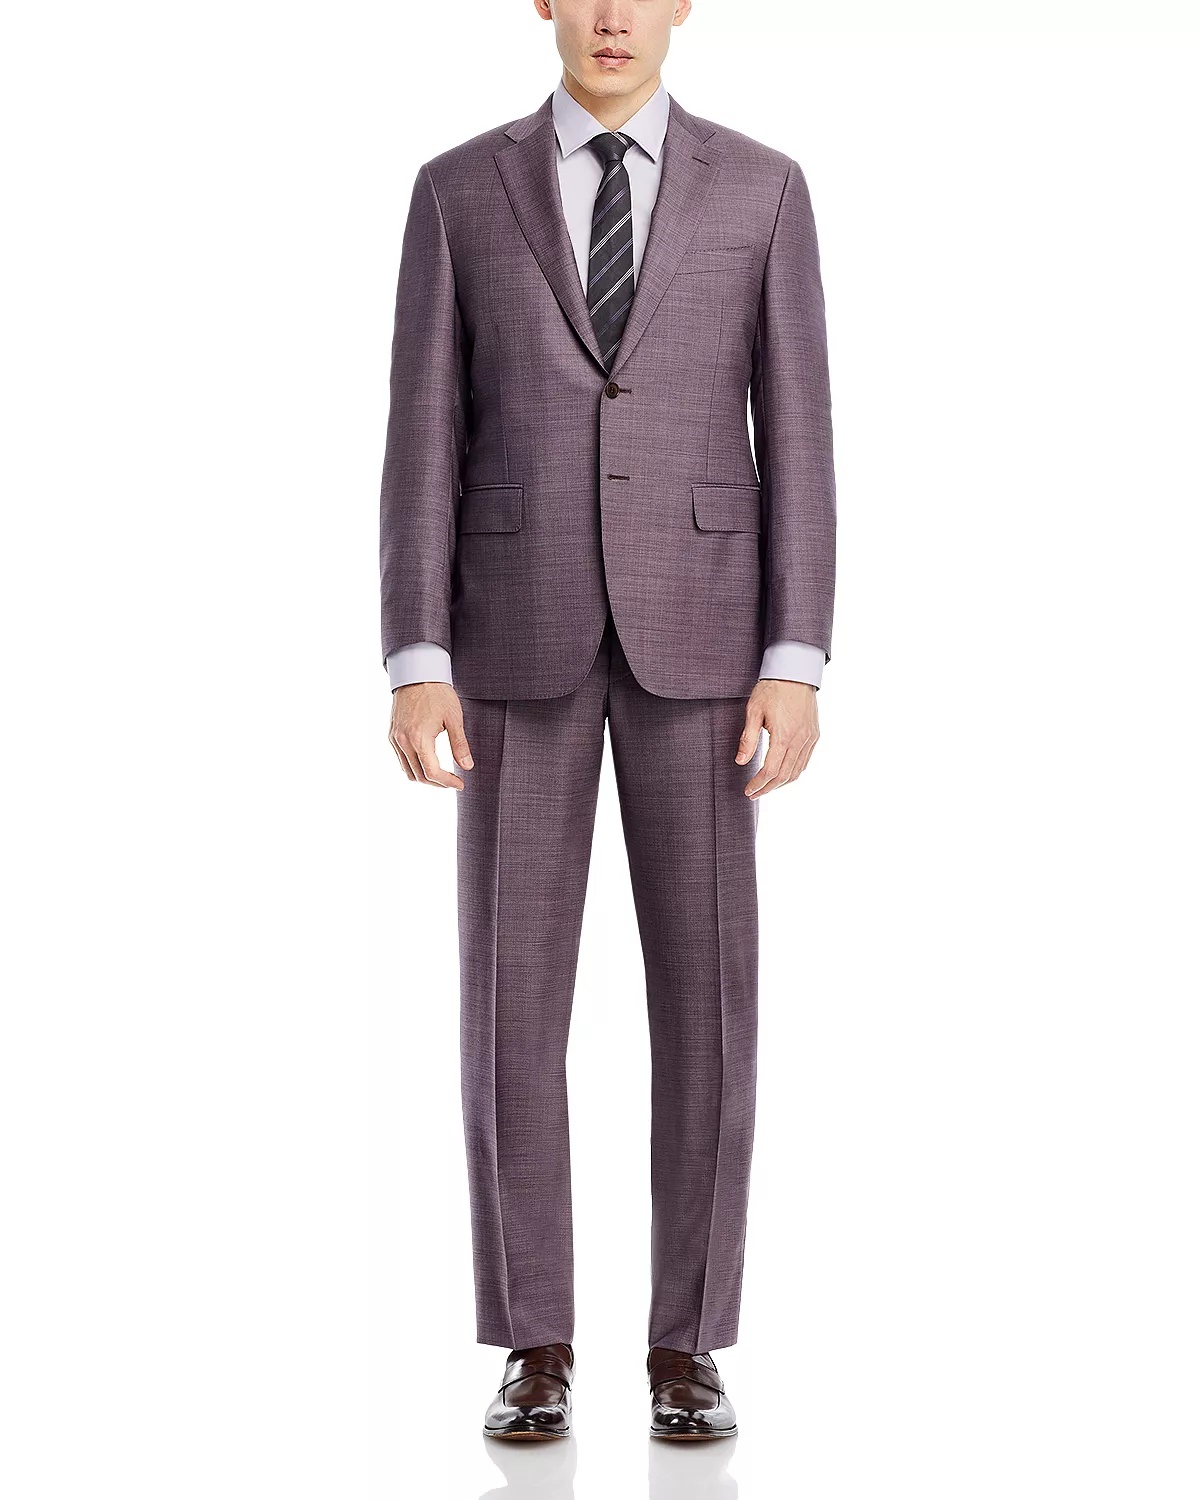 Siena Sharkskin Classic Fit Suit - 3